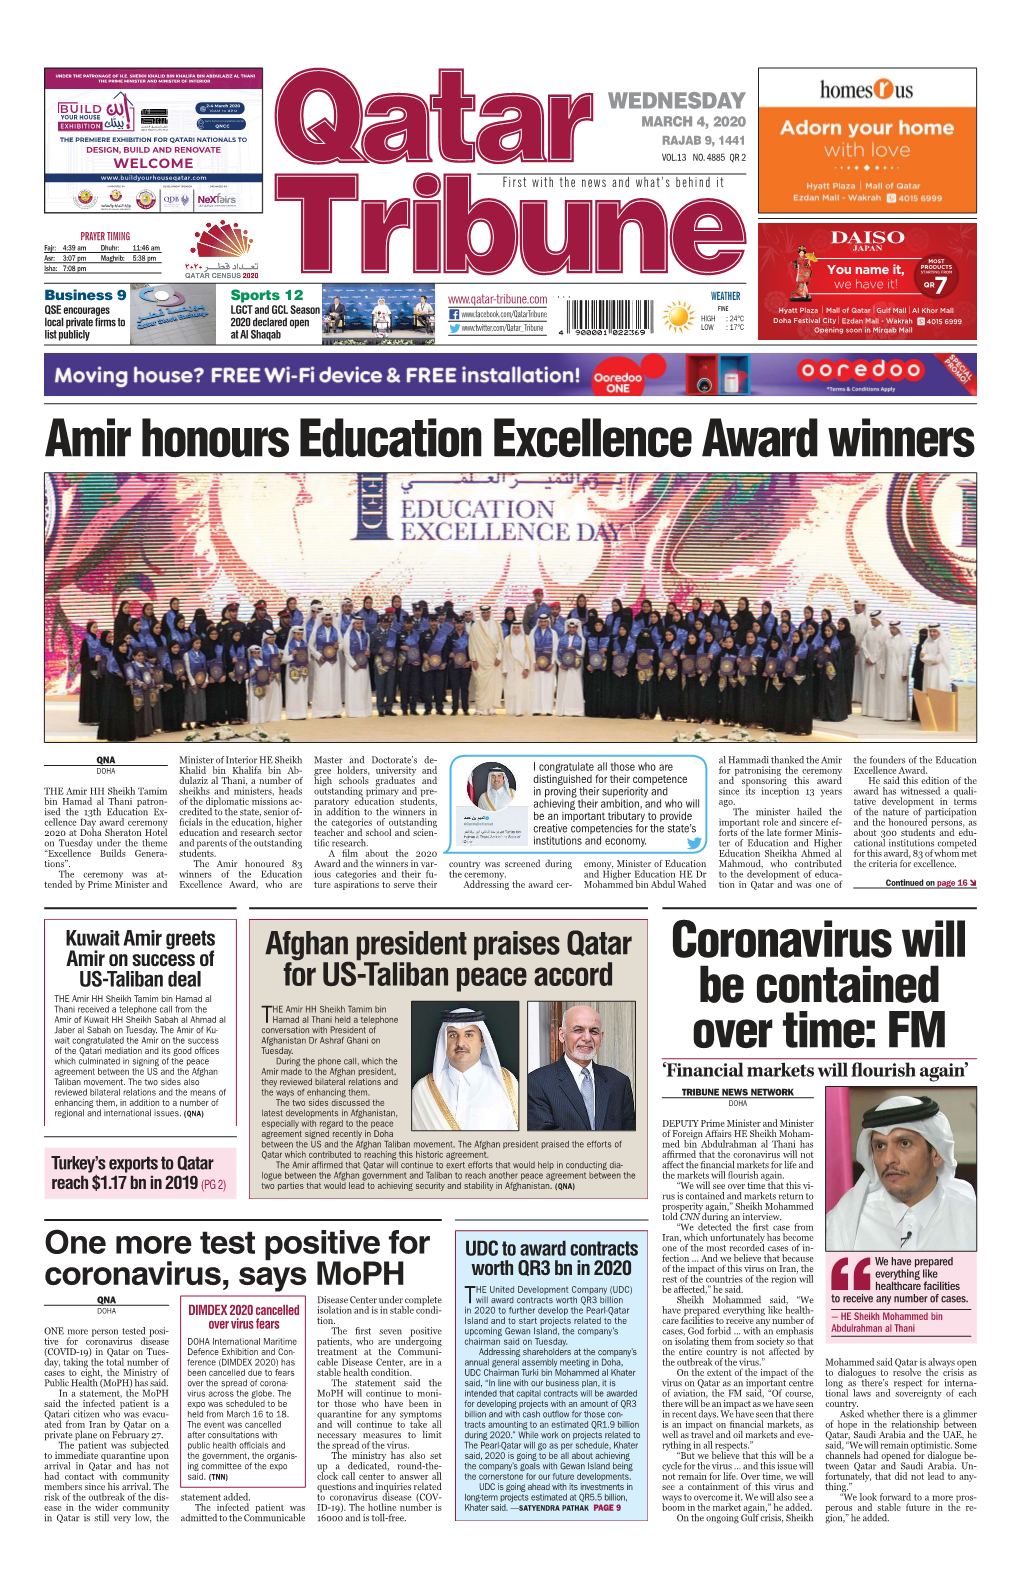 Amir Honours Education Excellence Award Winners